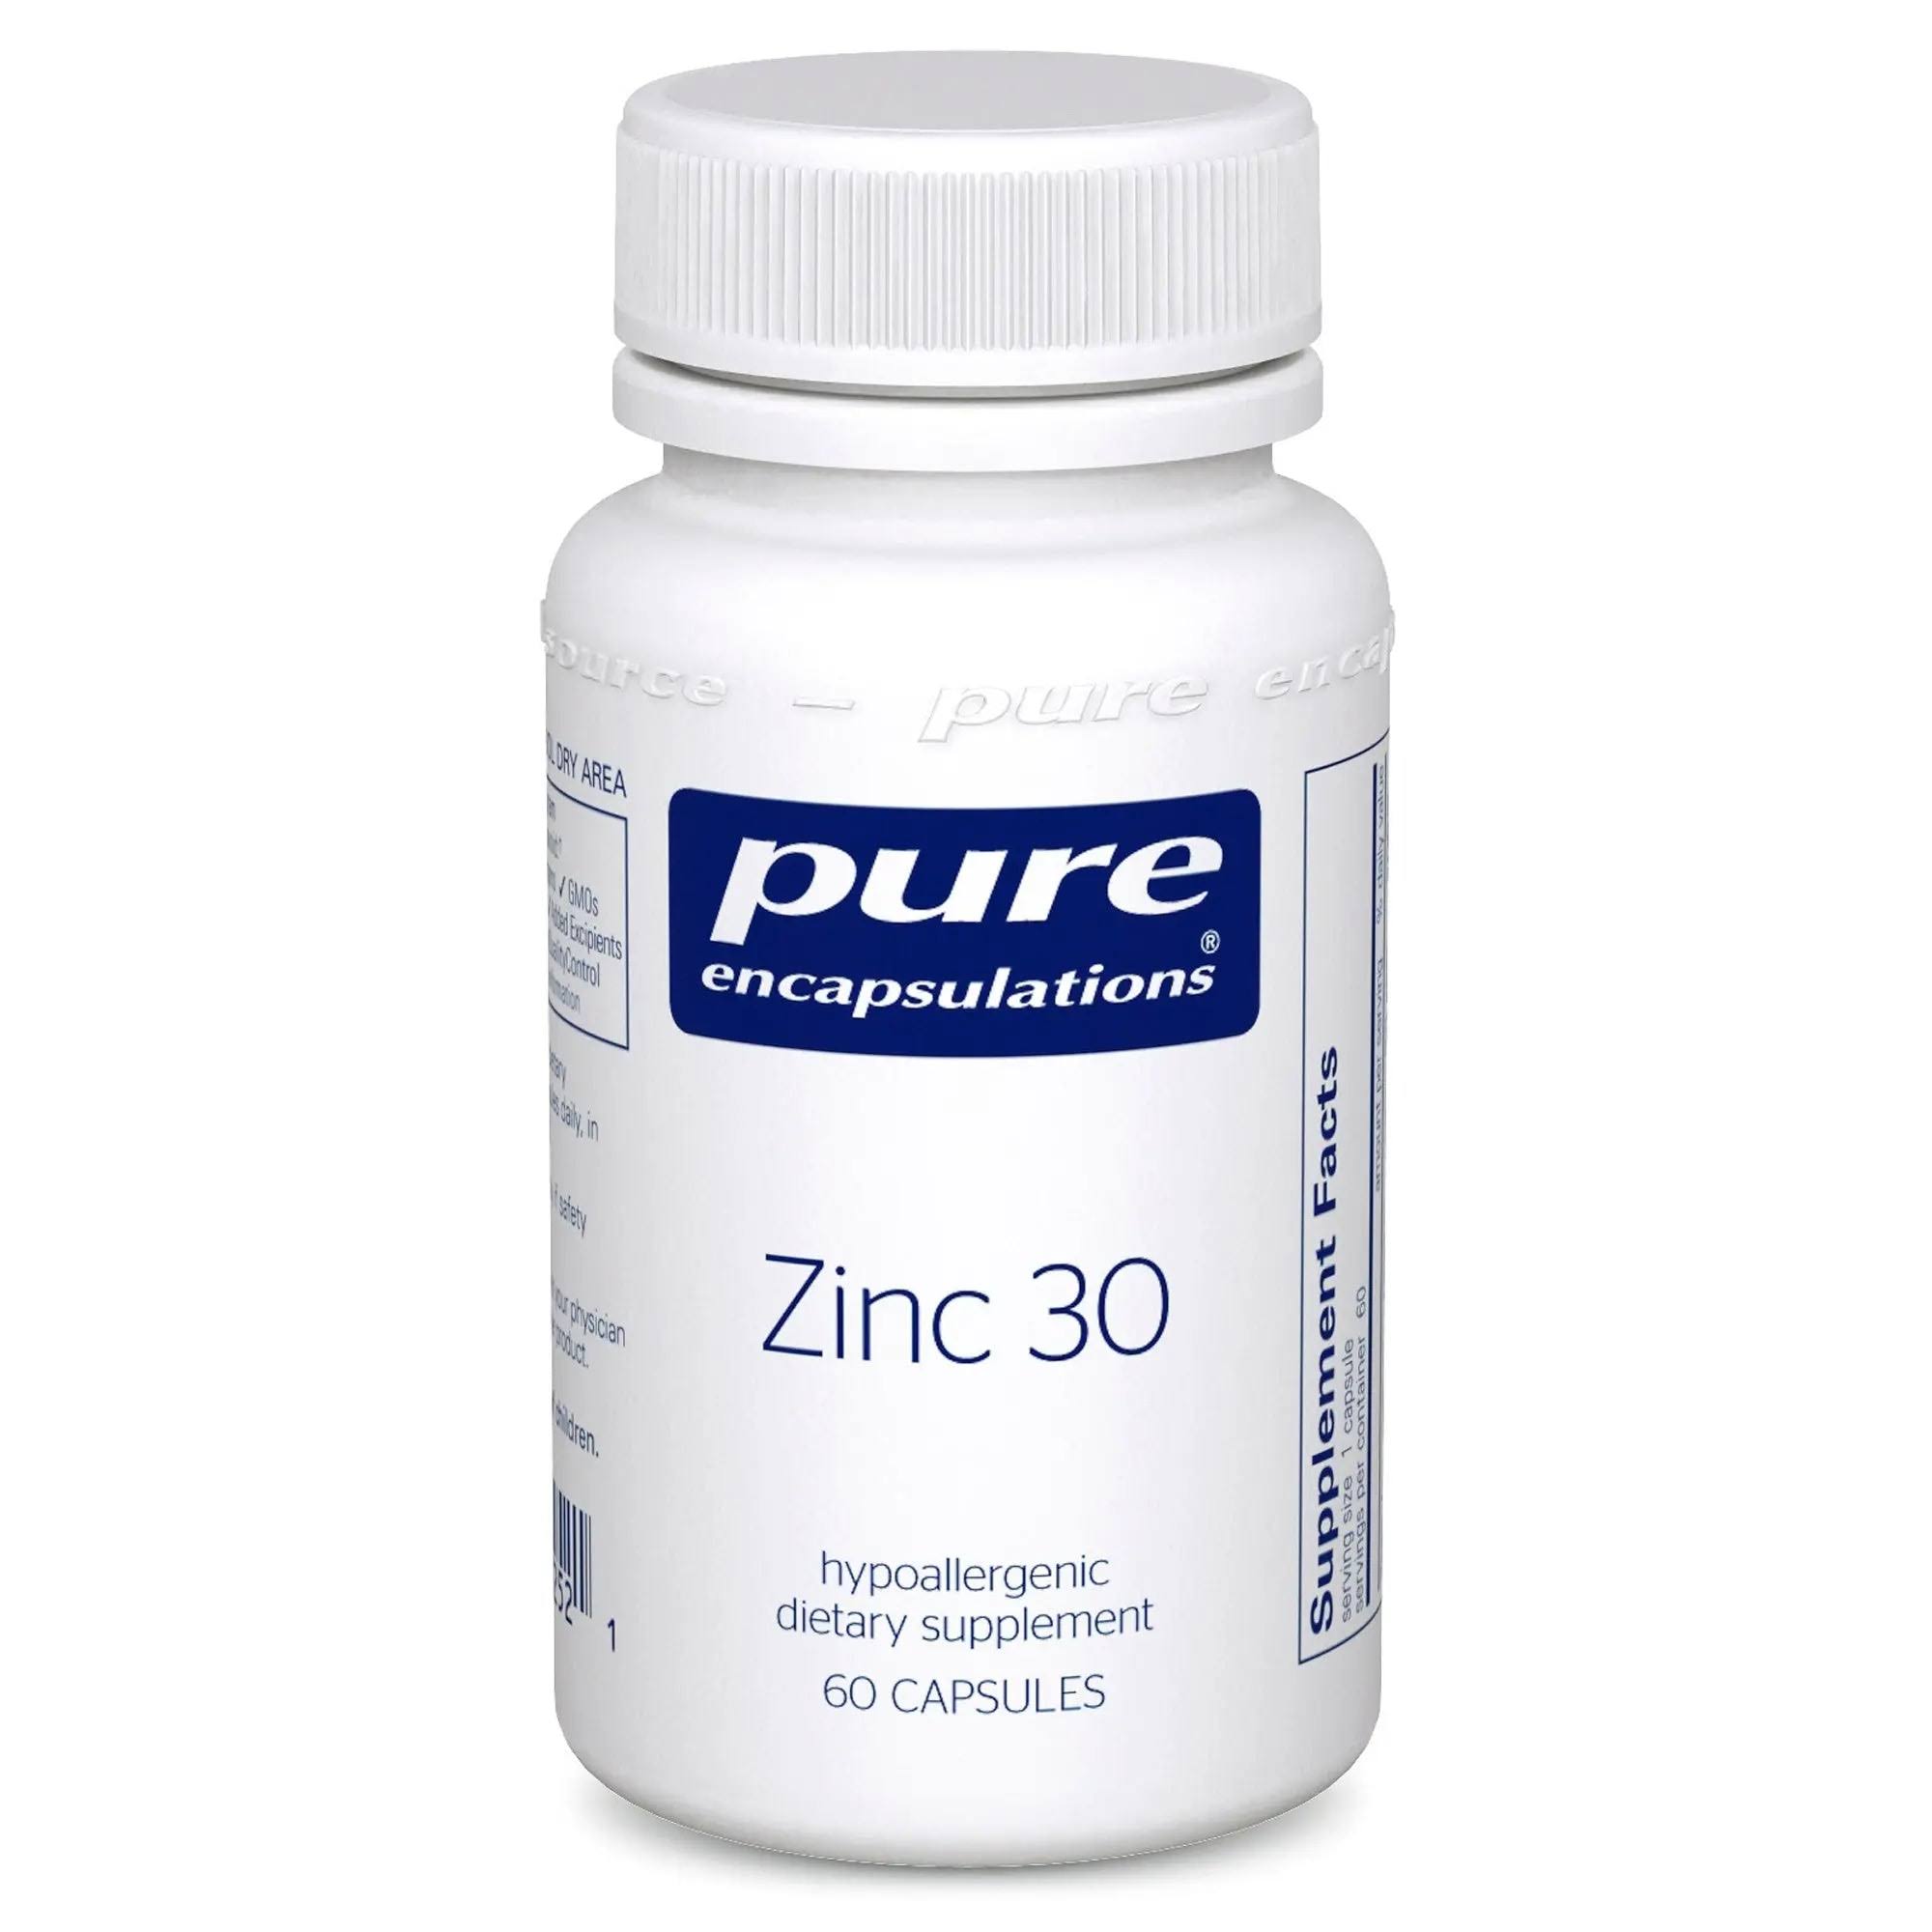 Pure Encapsulations - Zinc 30 - 60 Capsules